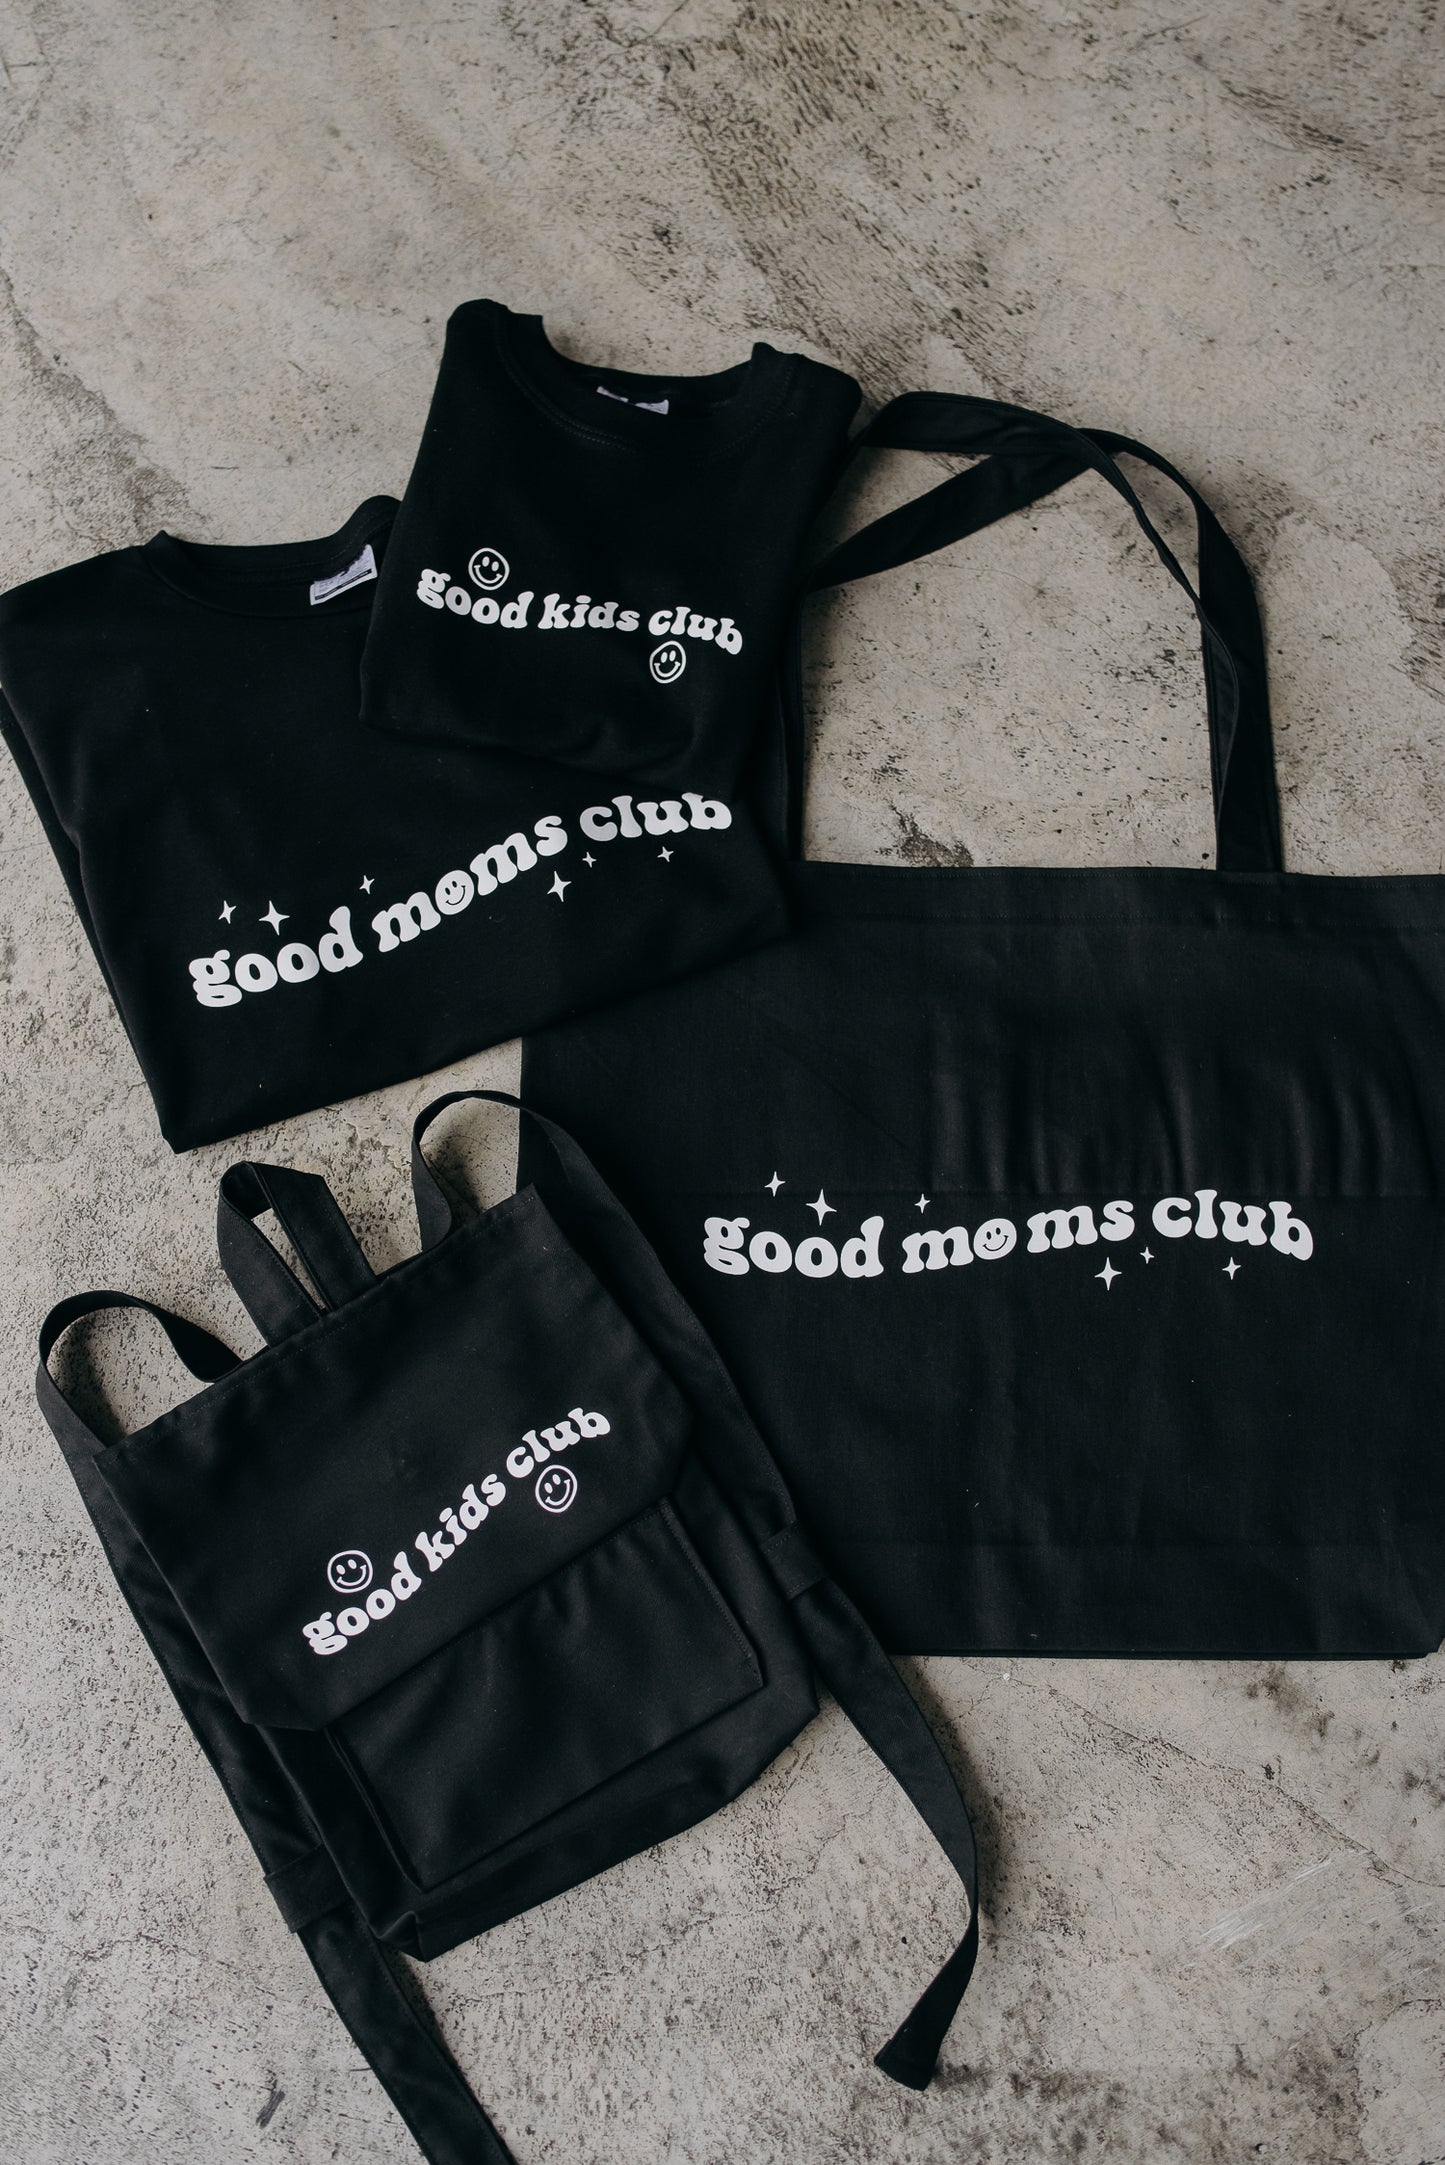 MiniBackpack -Good Kids Club